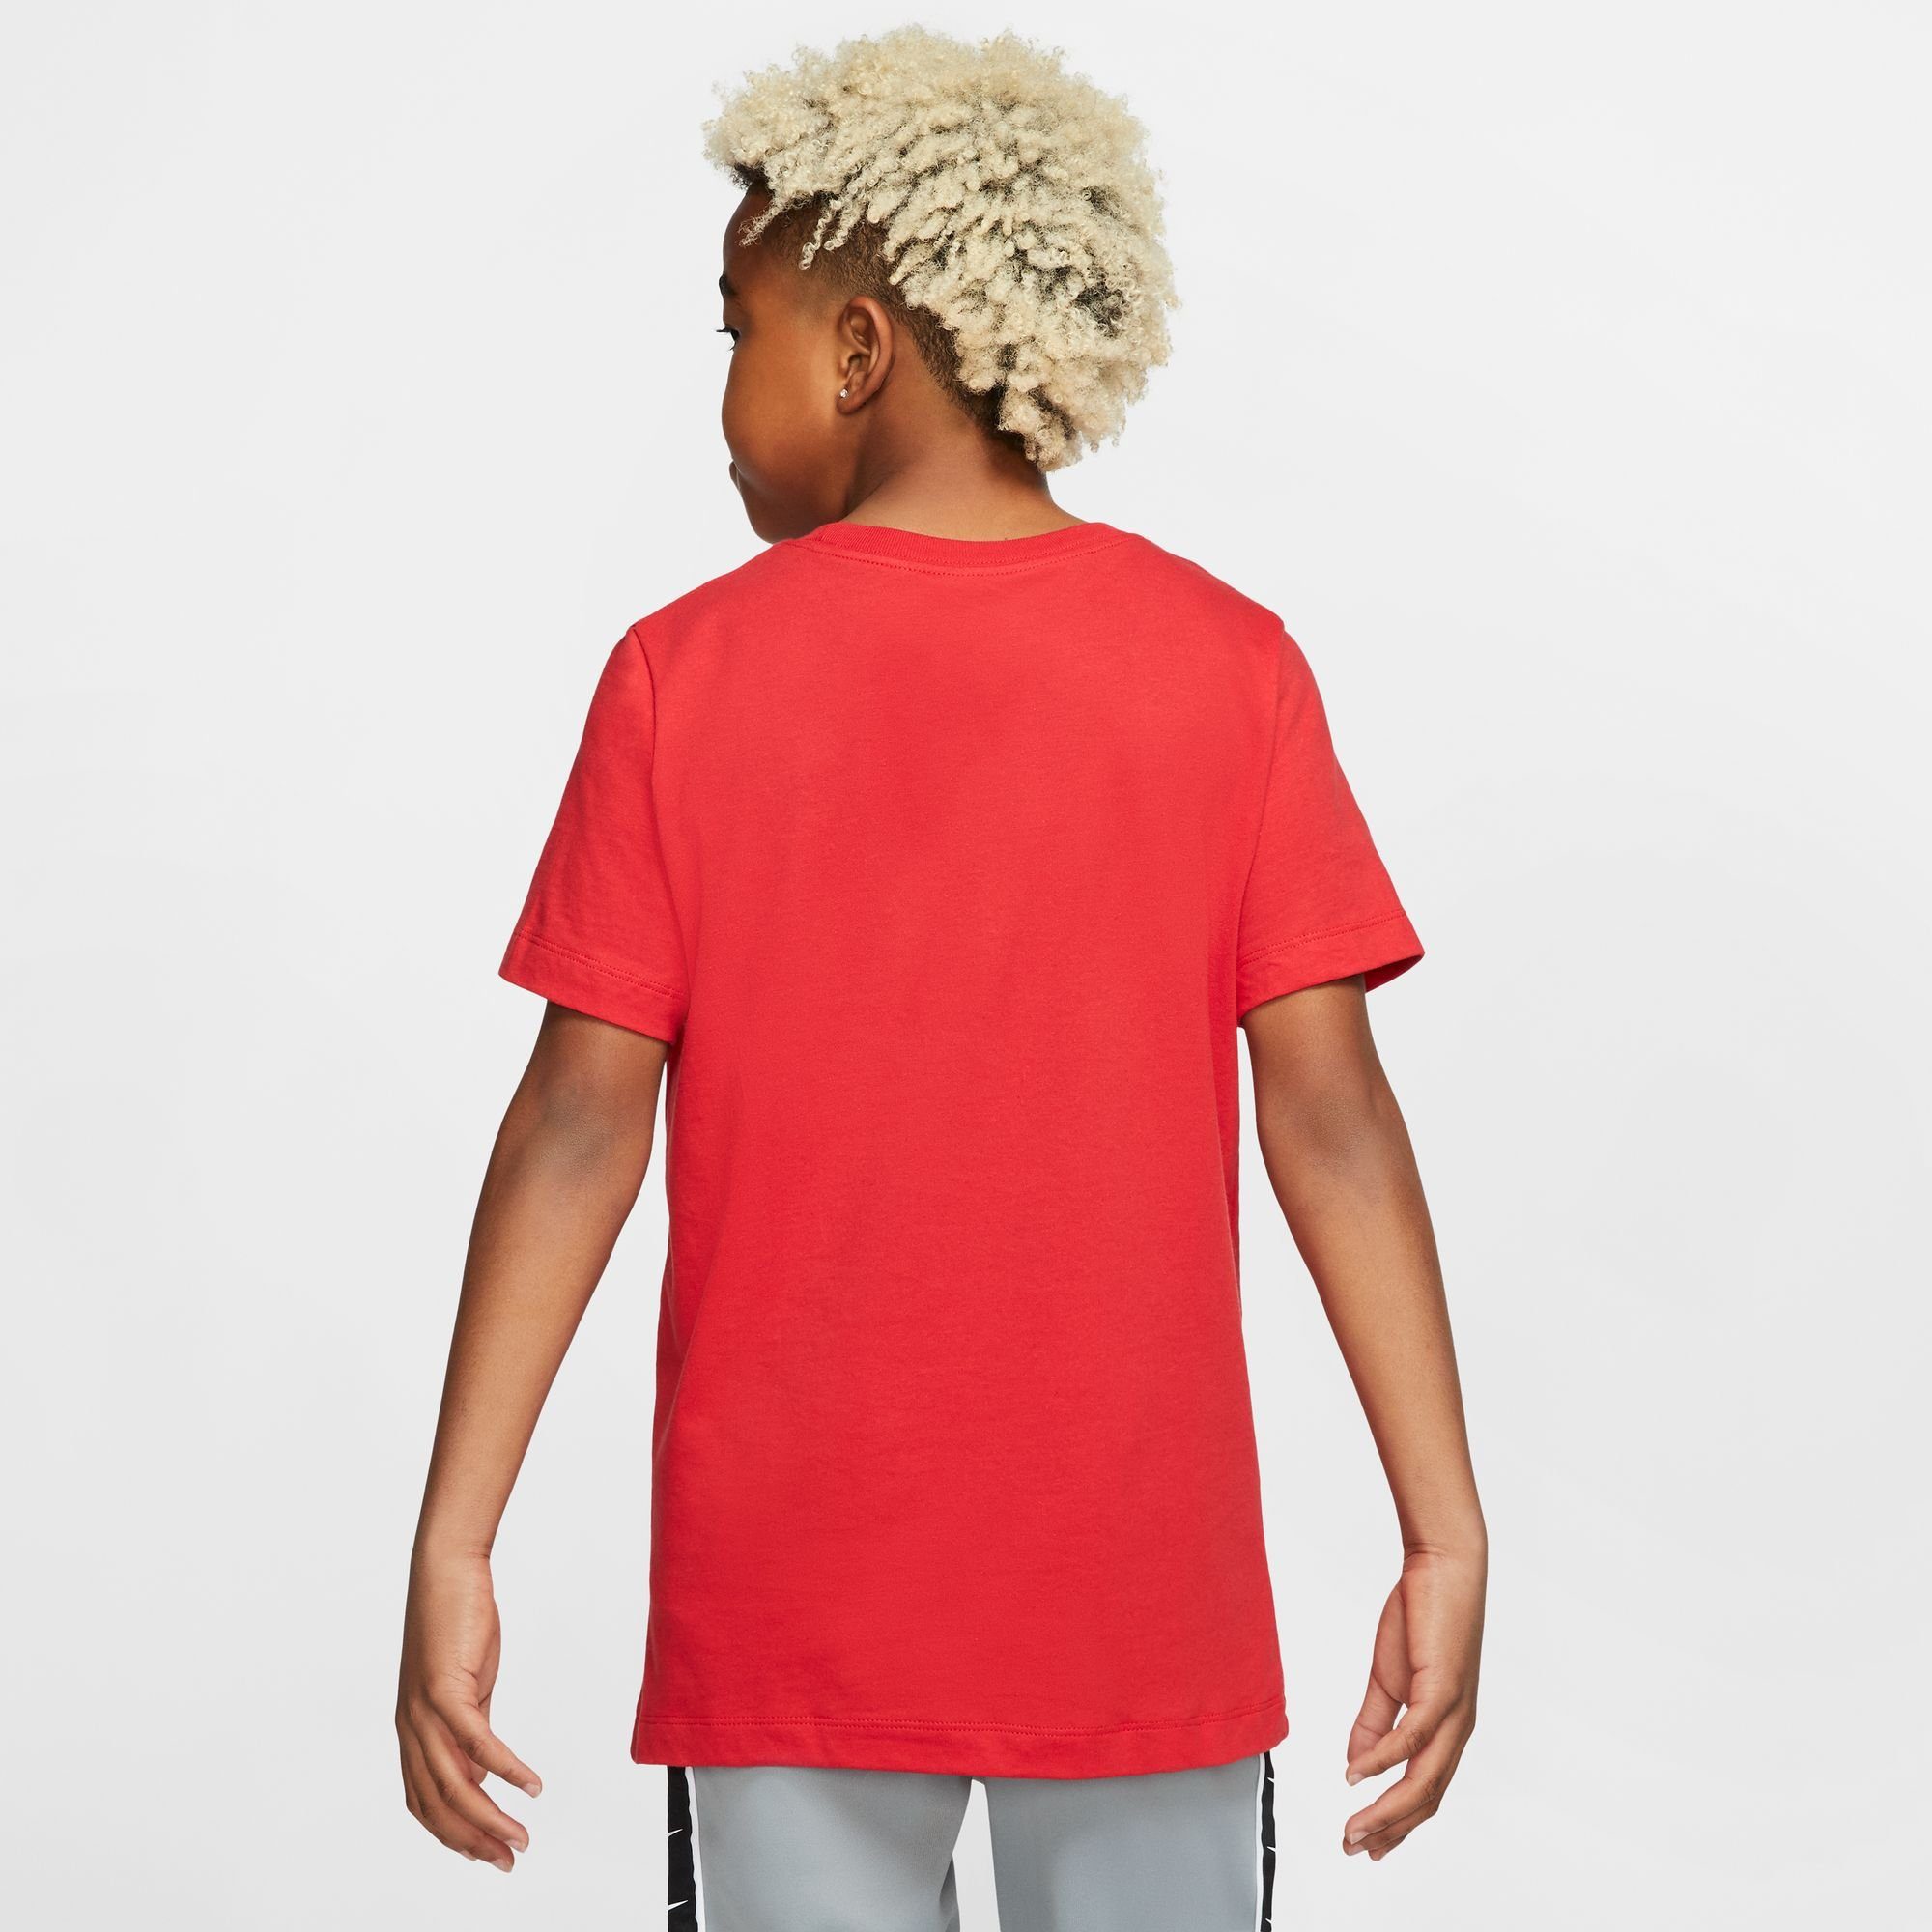 KIDS' BIG RED/BLACK T-Shirt UNIVERSITY COTTON Nike Sportswear T-SHIRT